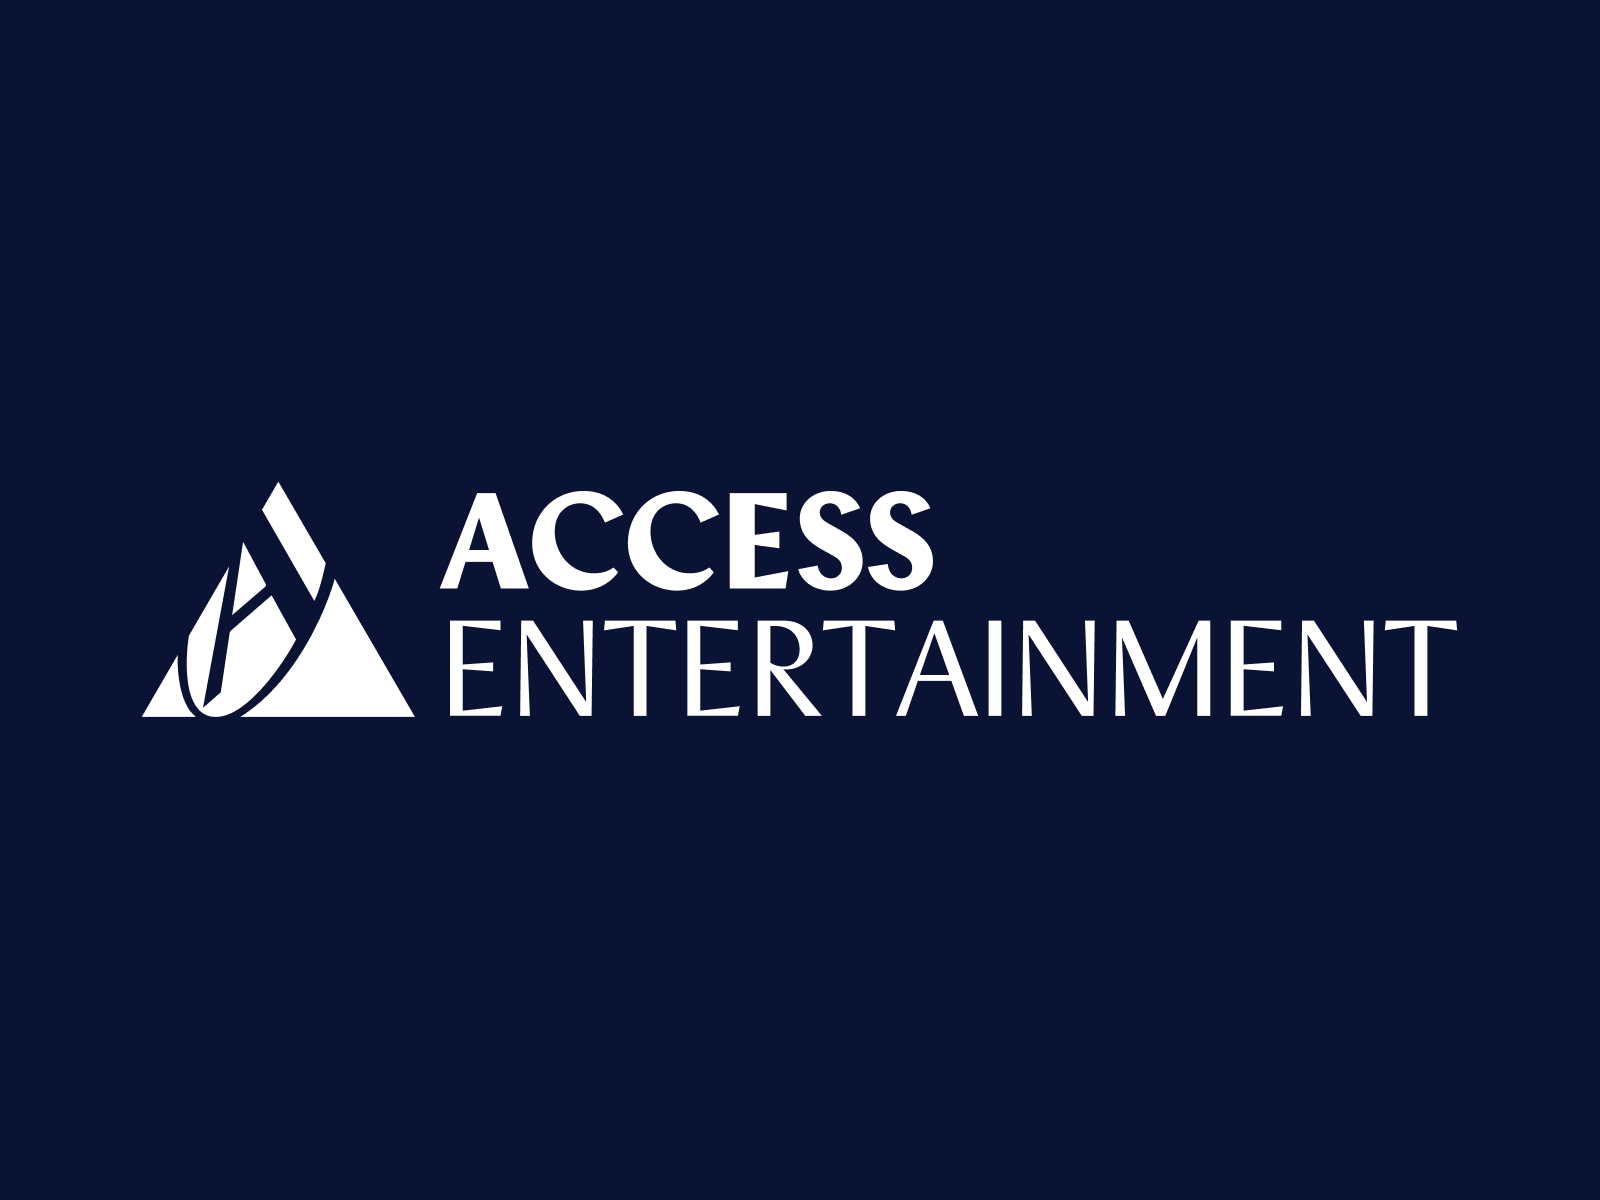 Access Entertainment